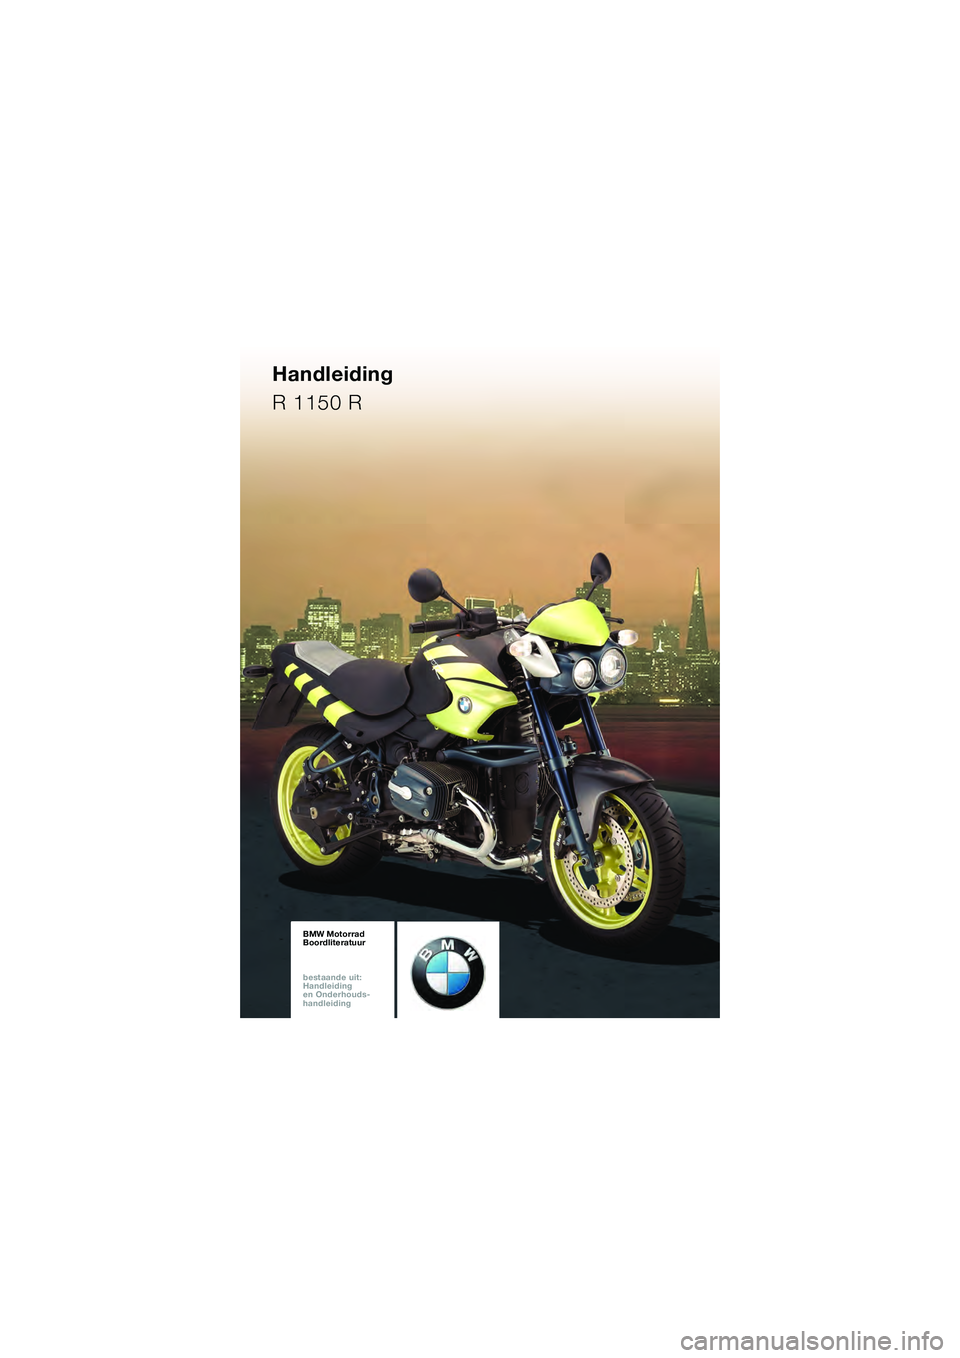 BMW MOTORRAD R 1150 R 2002  Handleiding (in Dutch) BMW Motorrad
Boordliteratuur
bestaande uit:  
Handleiding  
en Onderhouds- 
handleidingBMW Motorrad
Boordliteratuur
bestaande uit:  
Handleiding  
en Onderhouds- 
handleidingBMW Motorrad
Boordliteratu